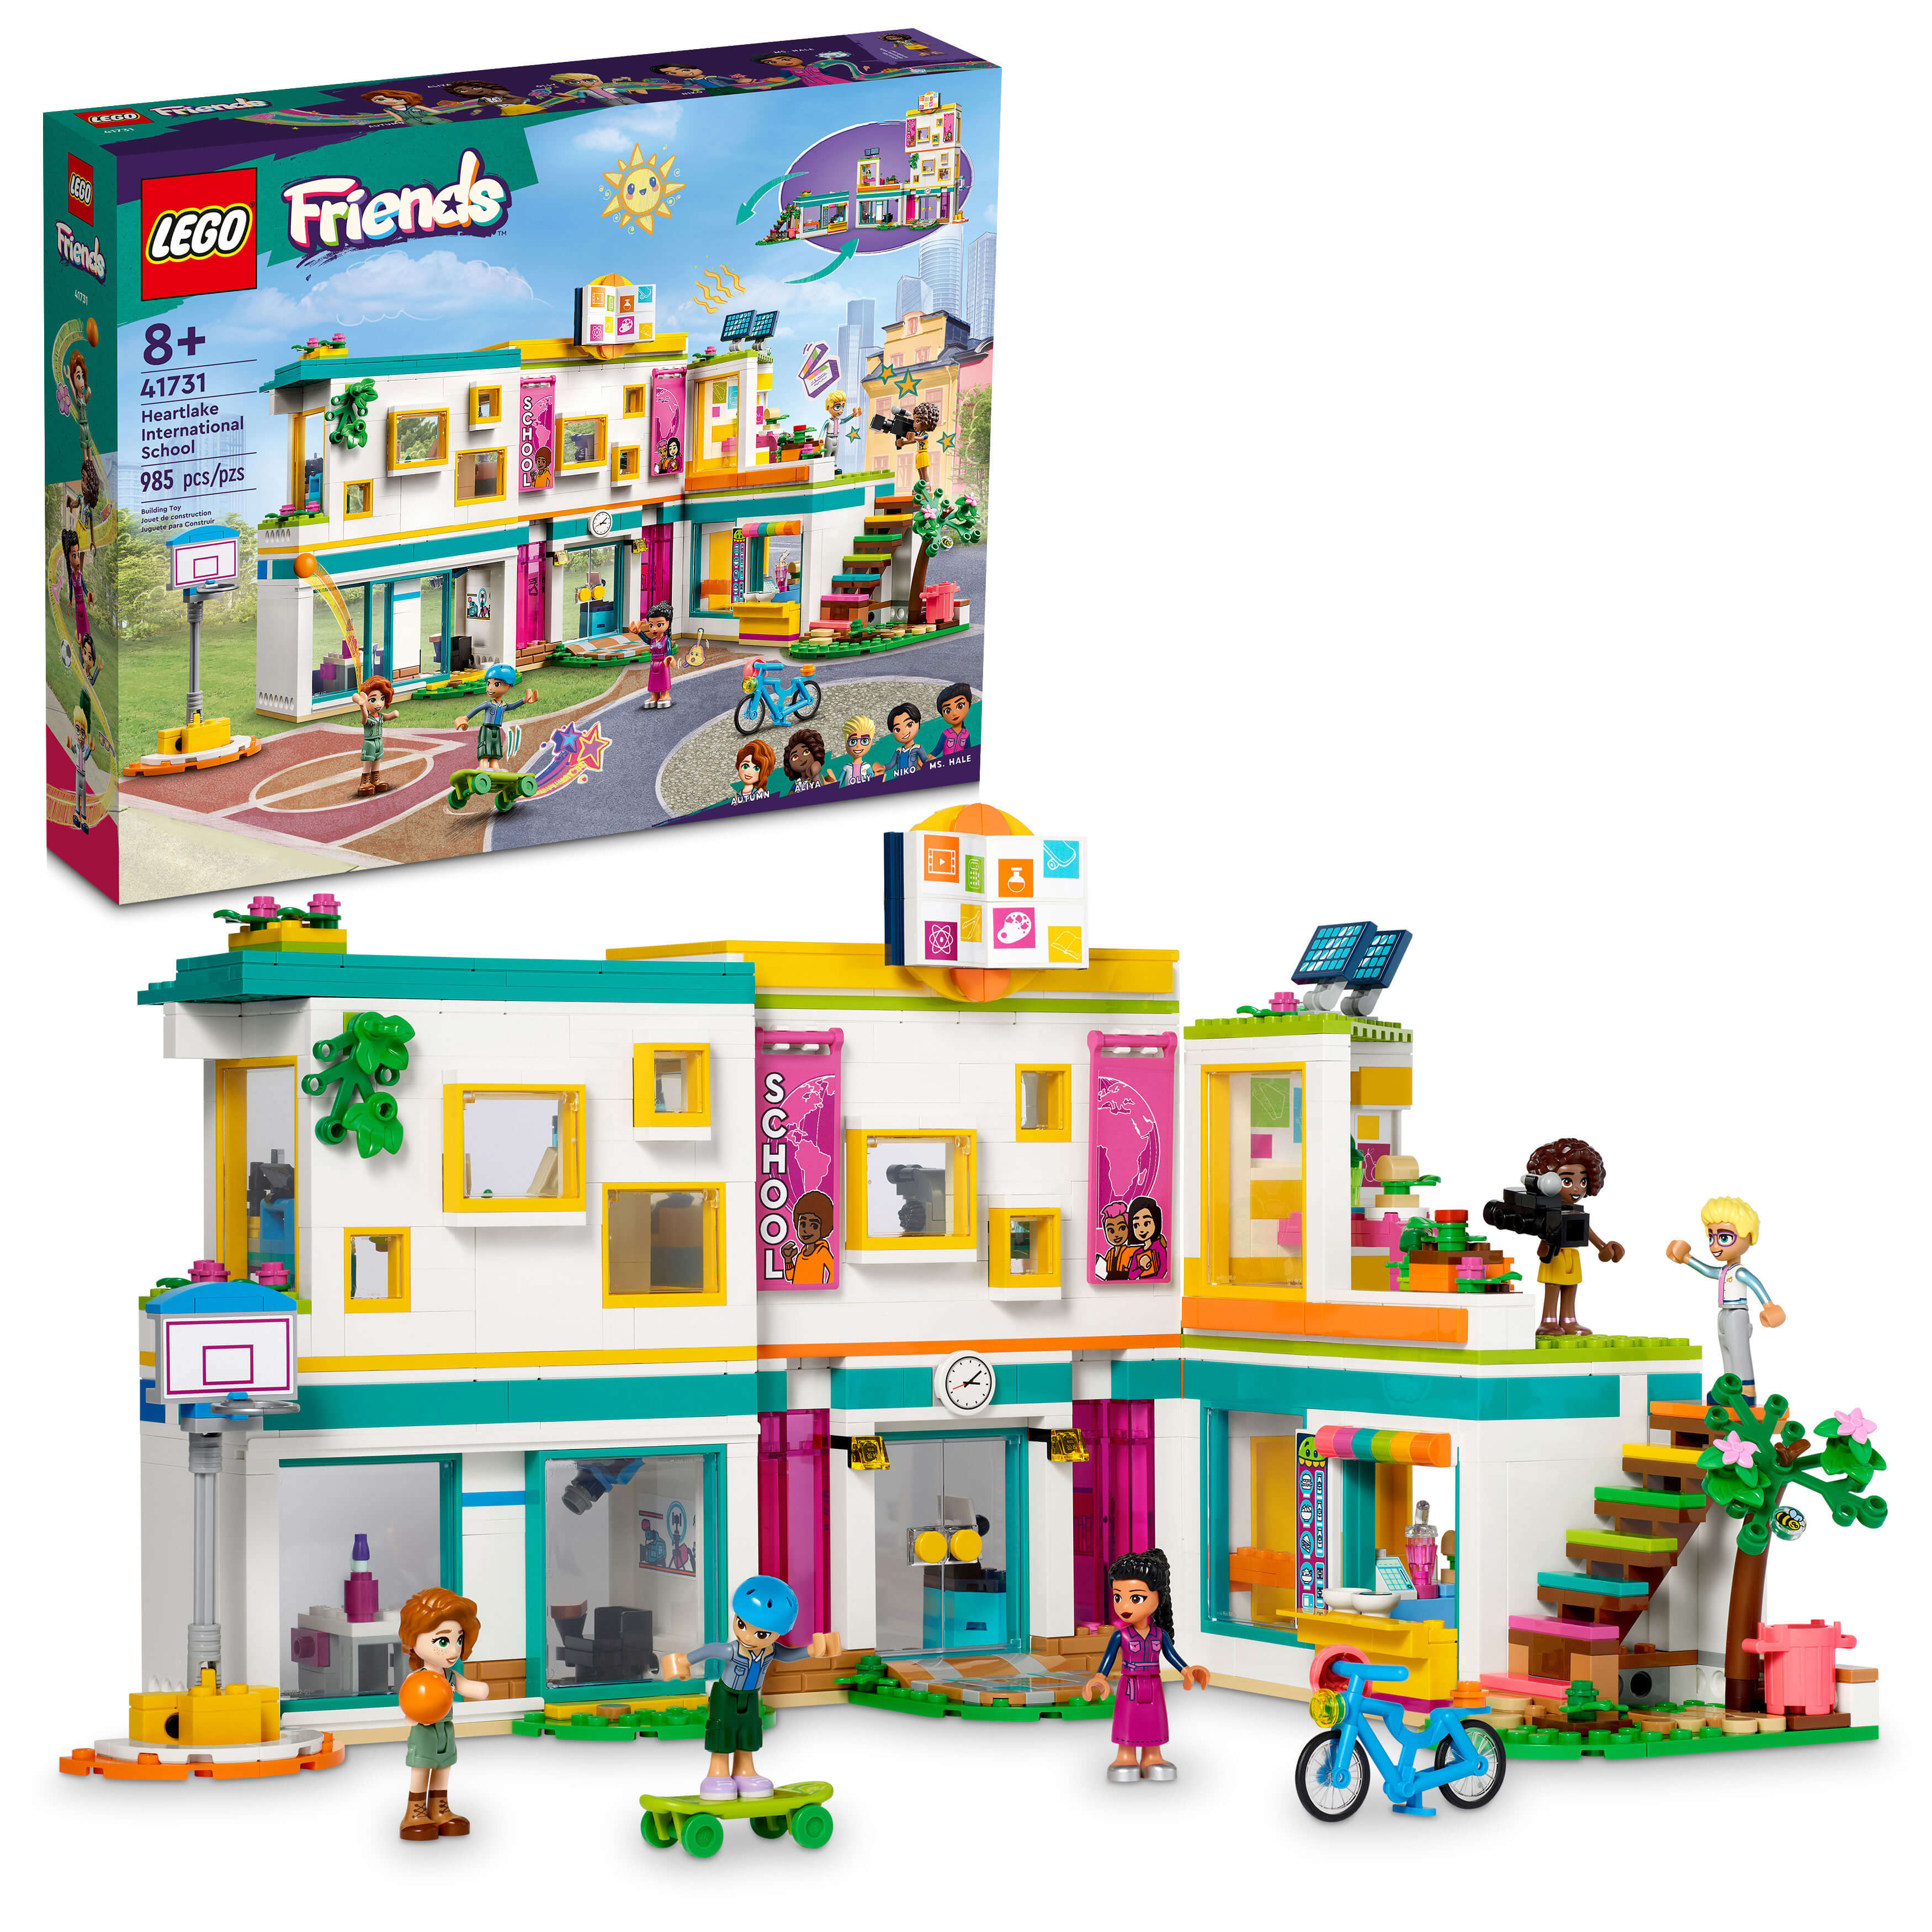 LEGO® Friends Heartlake International School 41731 Building Toy Set (985 Pieces)